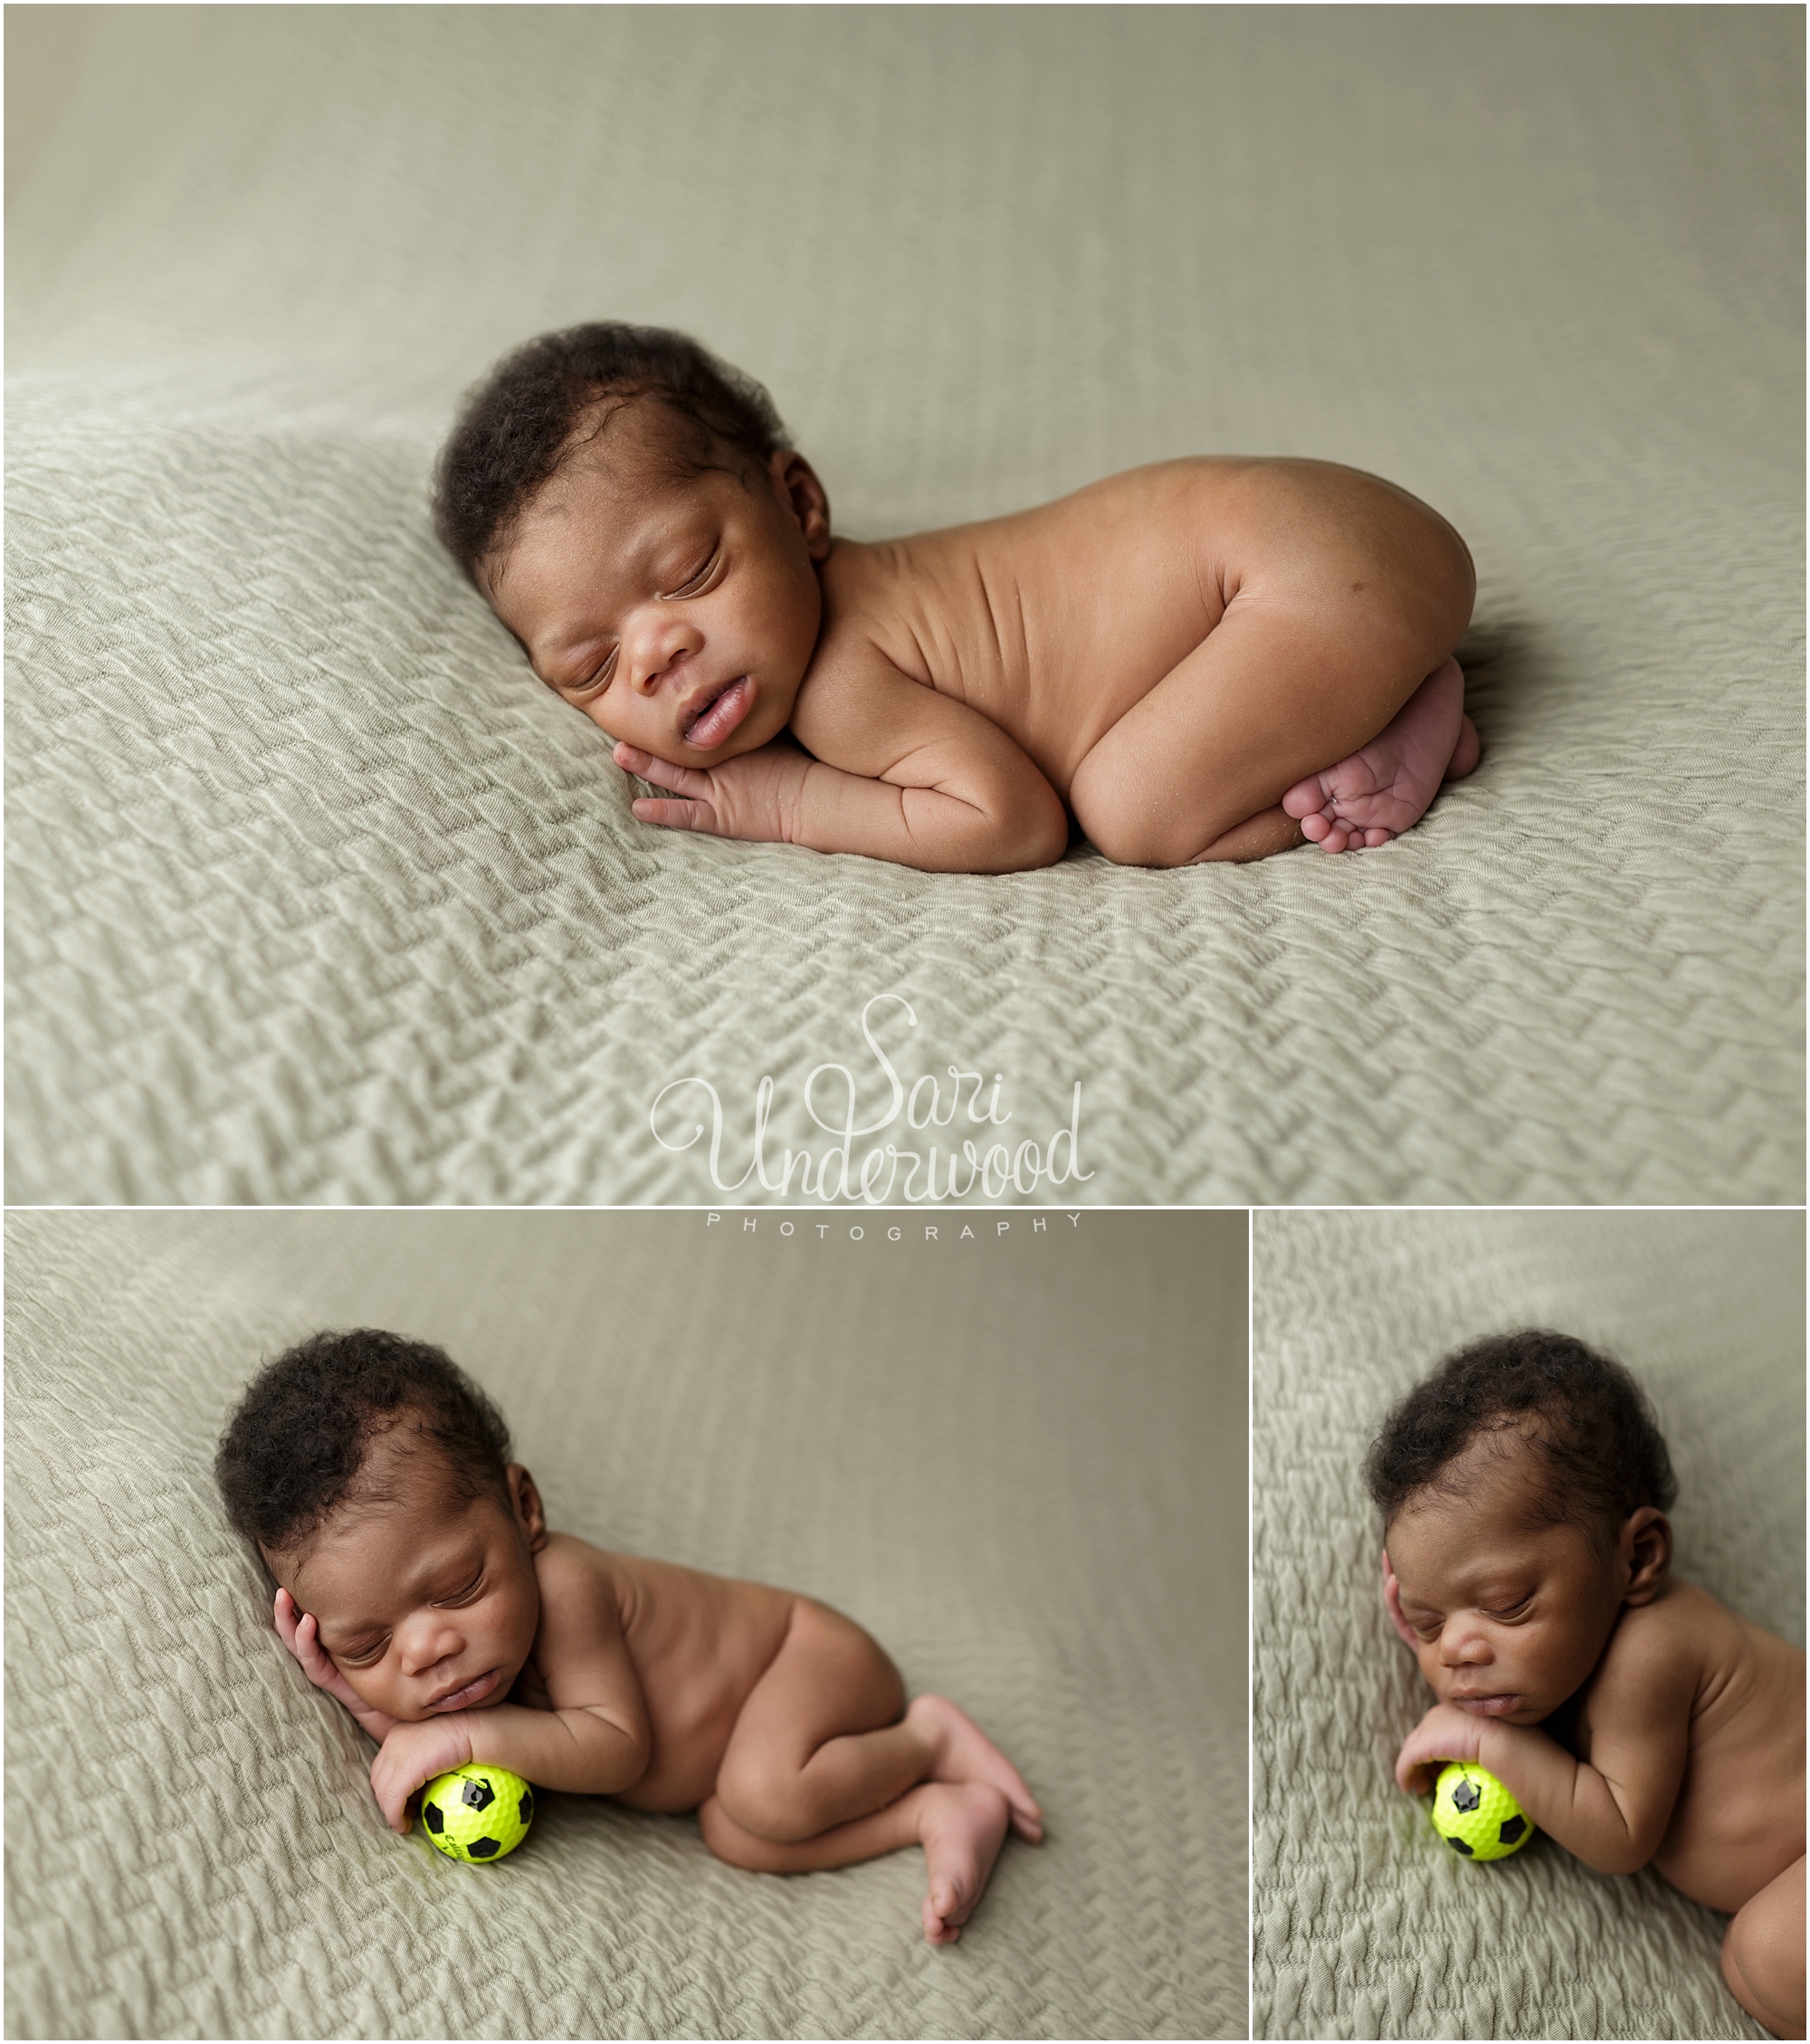 african american newborn baby boy posing with a soccer ball